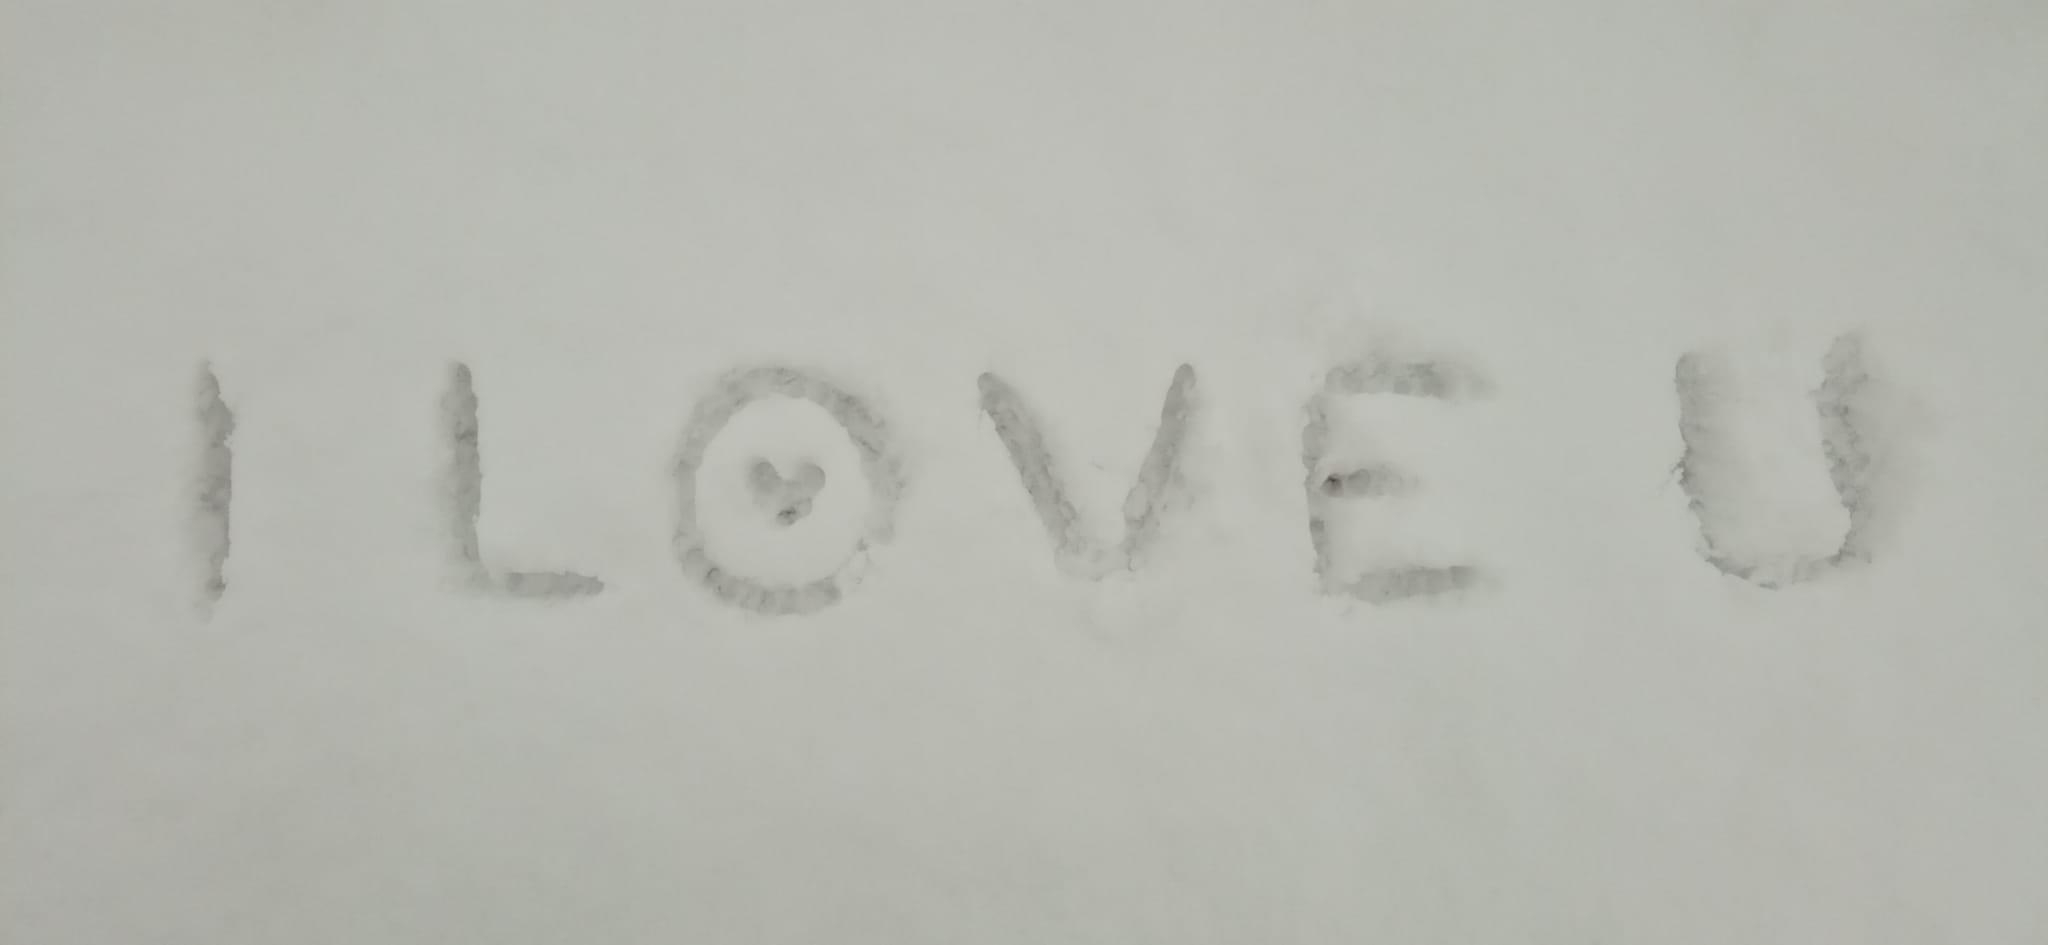 #schneebild #iloveyou #schnee #winter